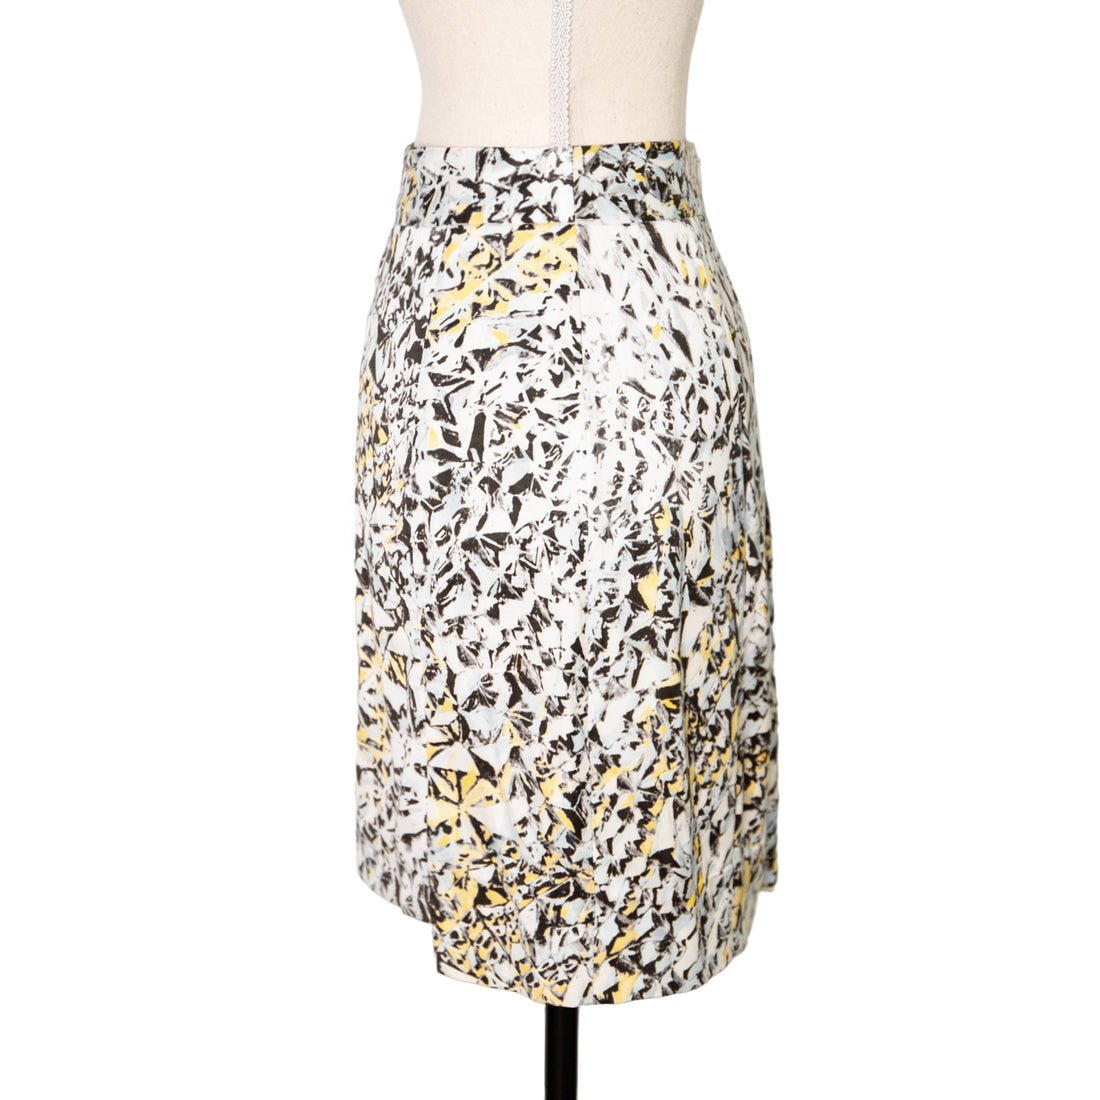 Lala Berlin Light colorful summer skirt